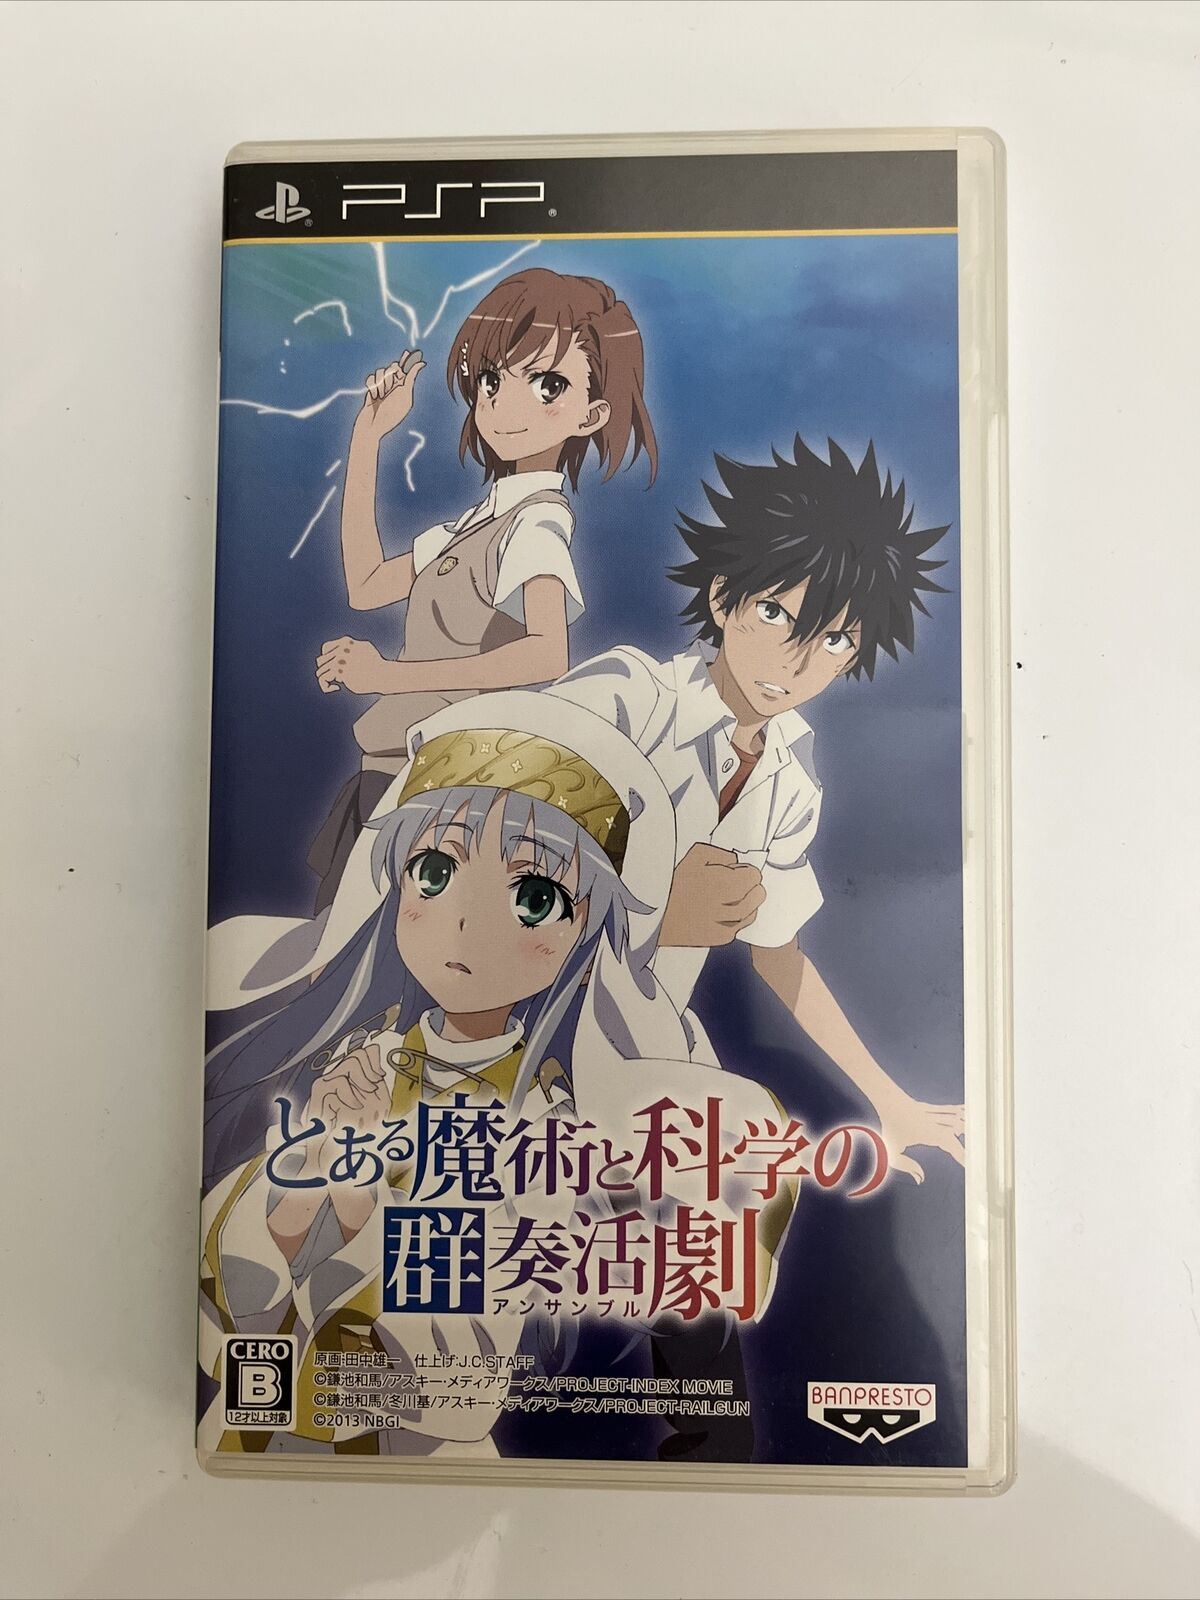 Toaru Majutsu to Kagaku no Ensemble - Sony PlayStation PSP JAPAN Game Complete